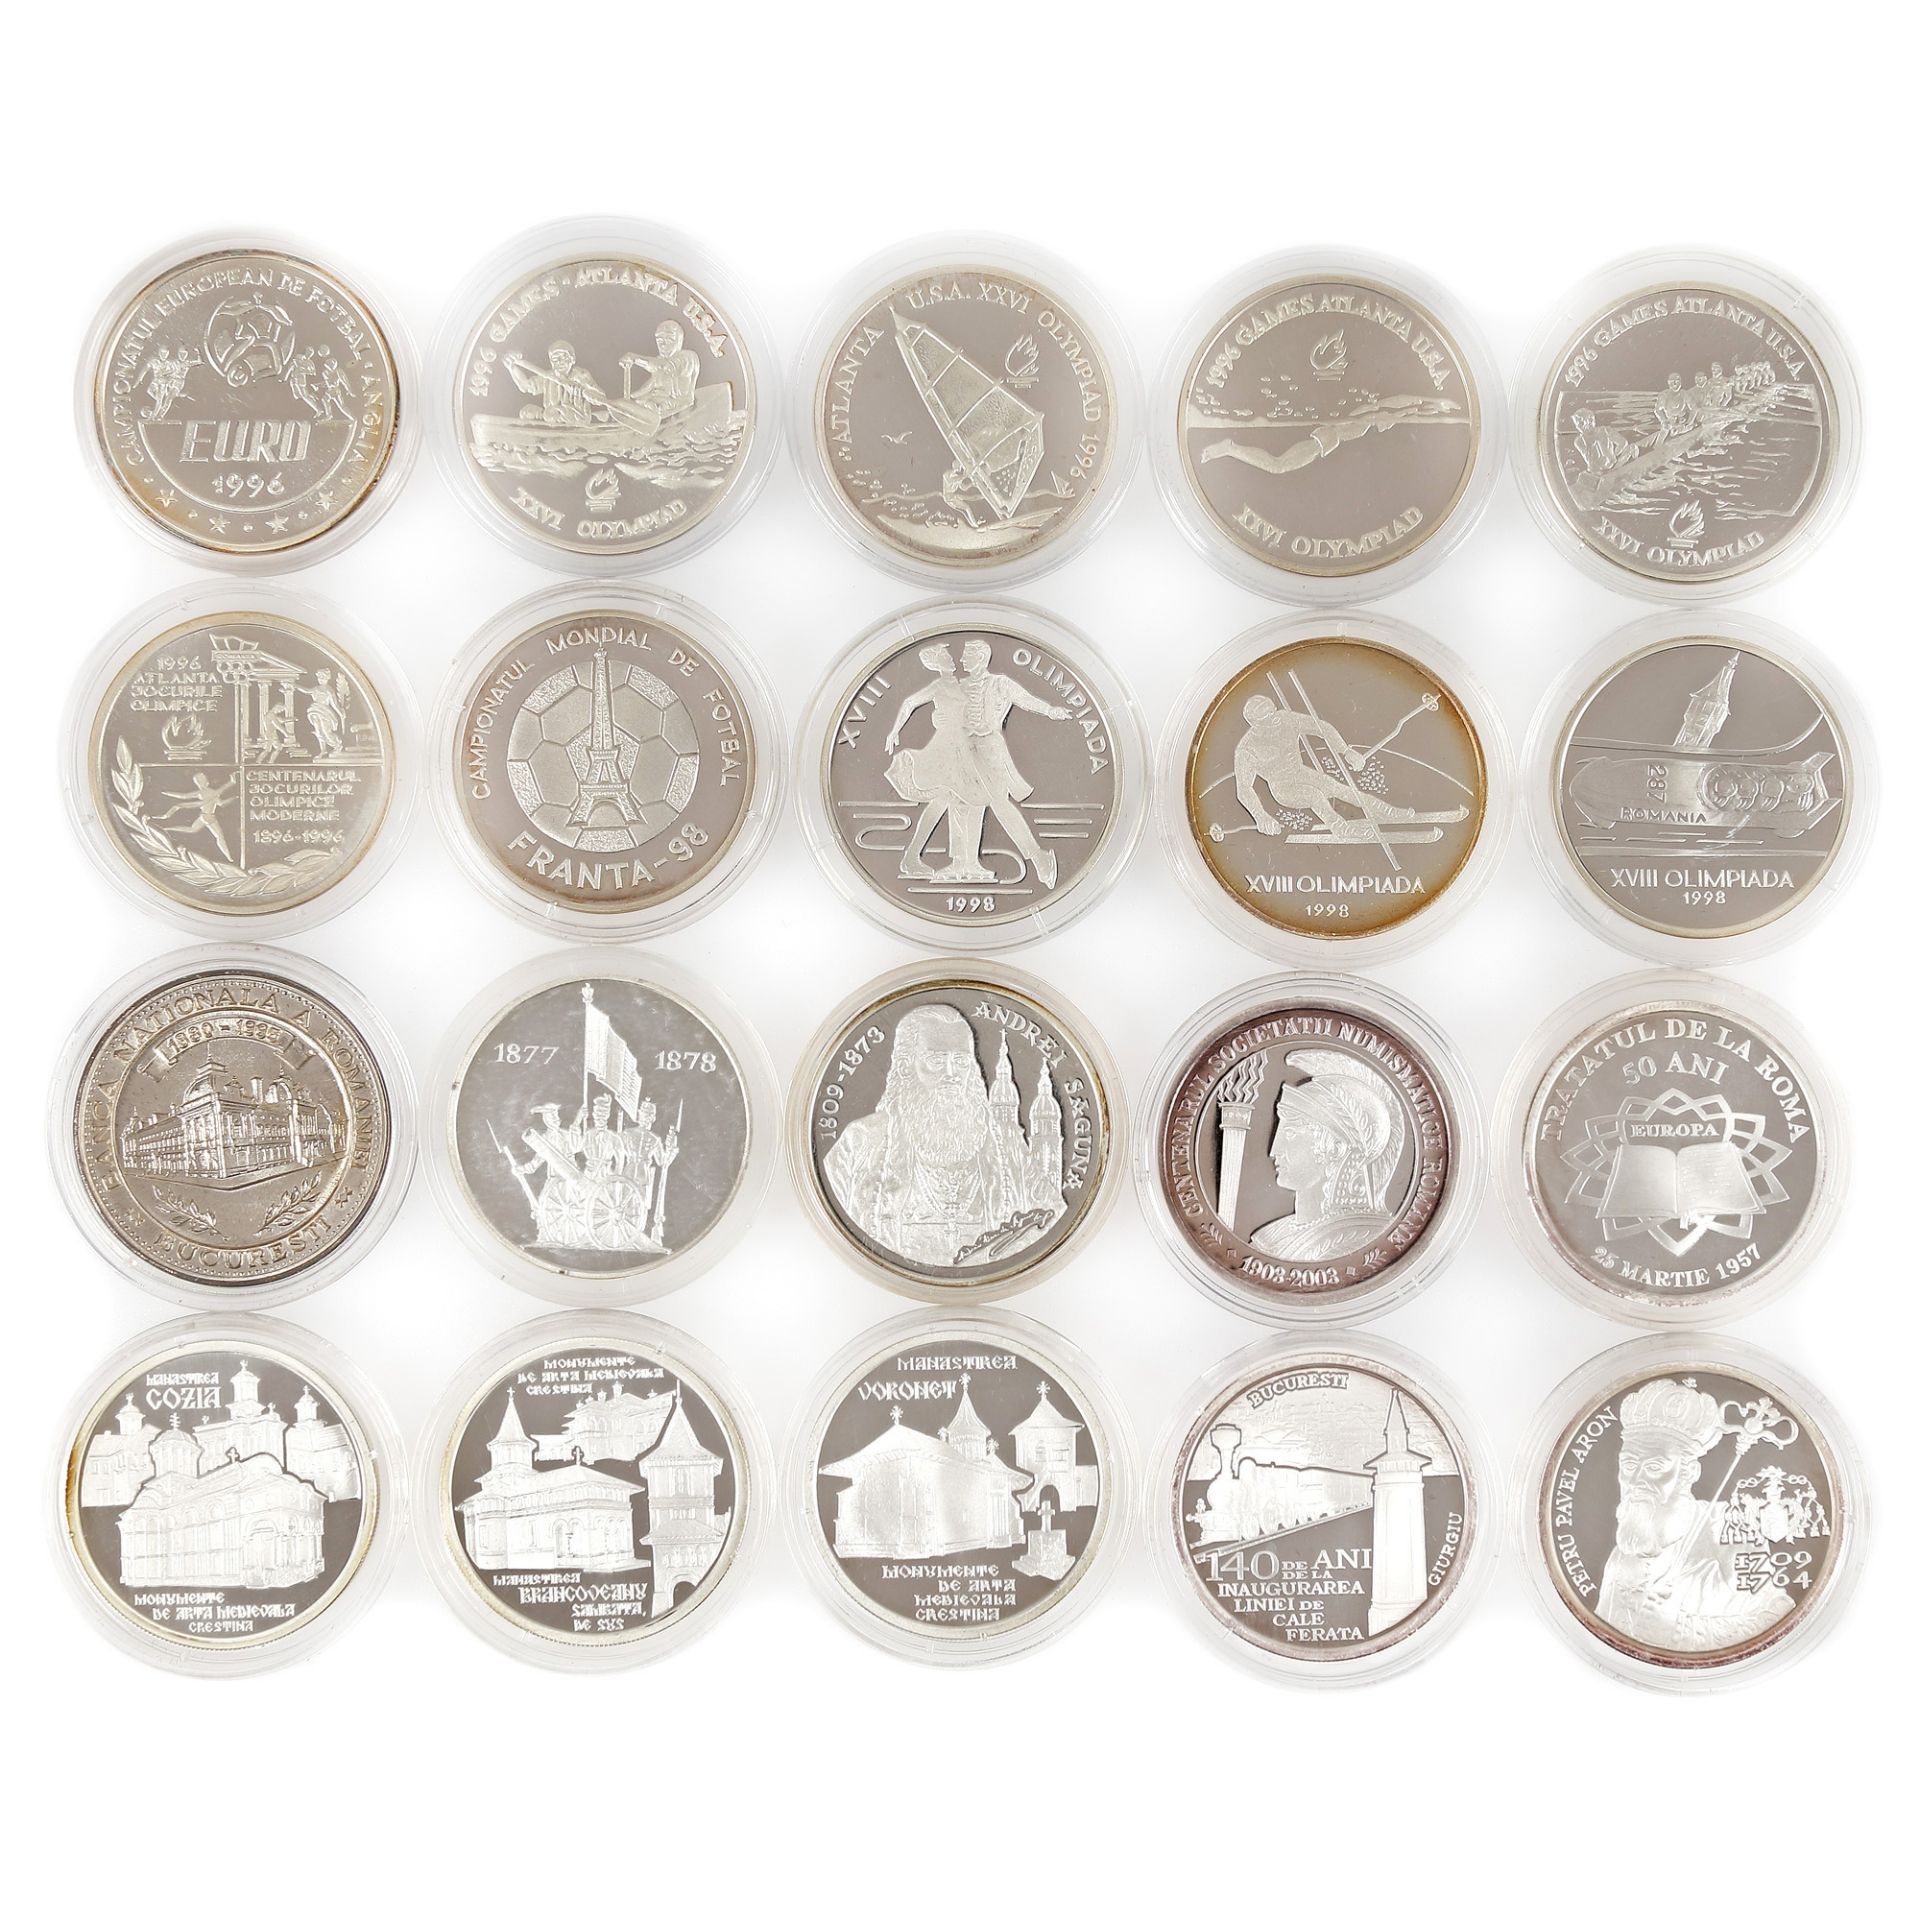 Lot of twenty BNR commemorative coins, silver